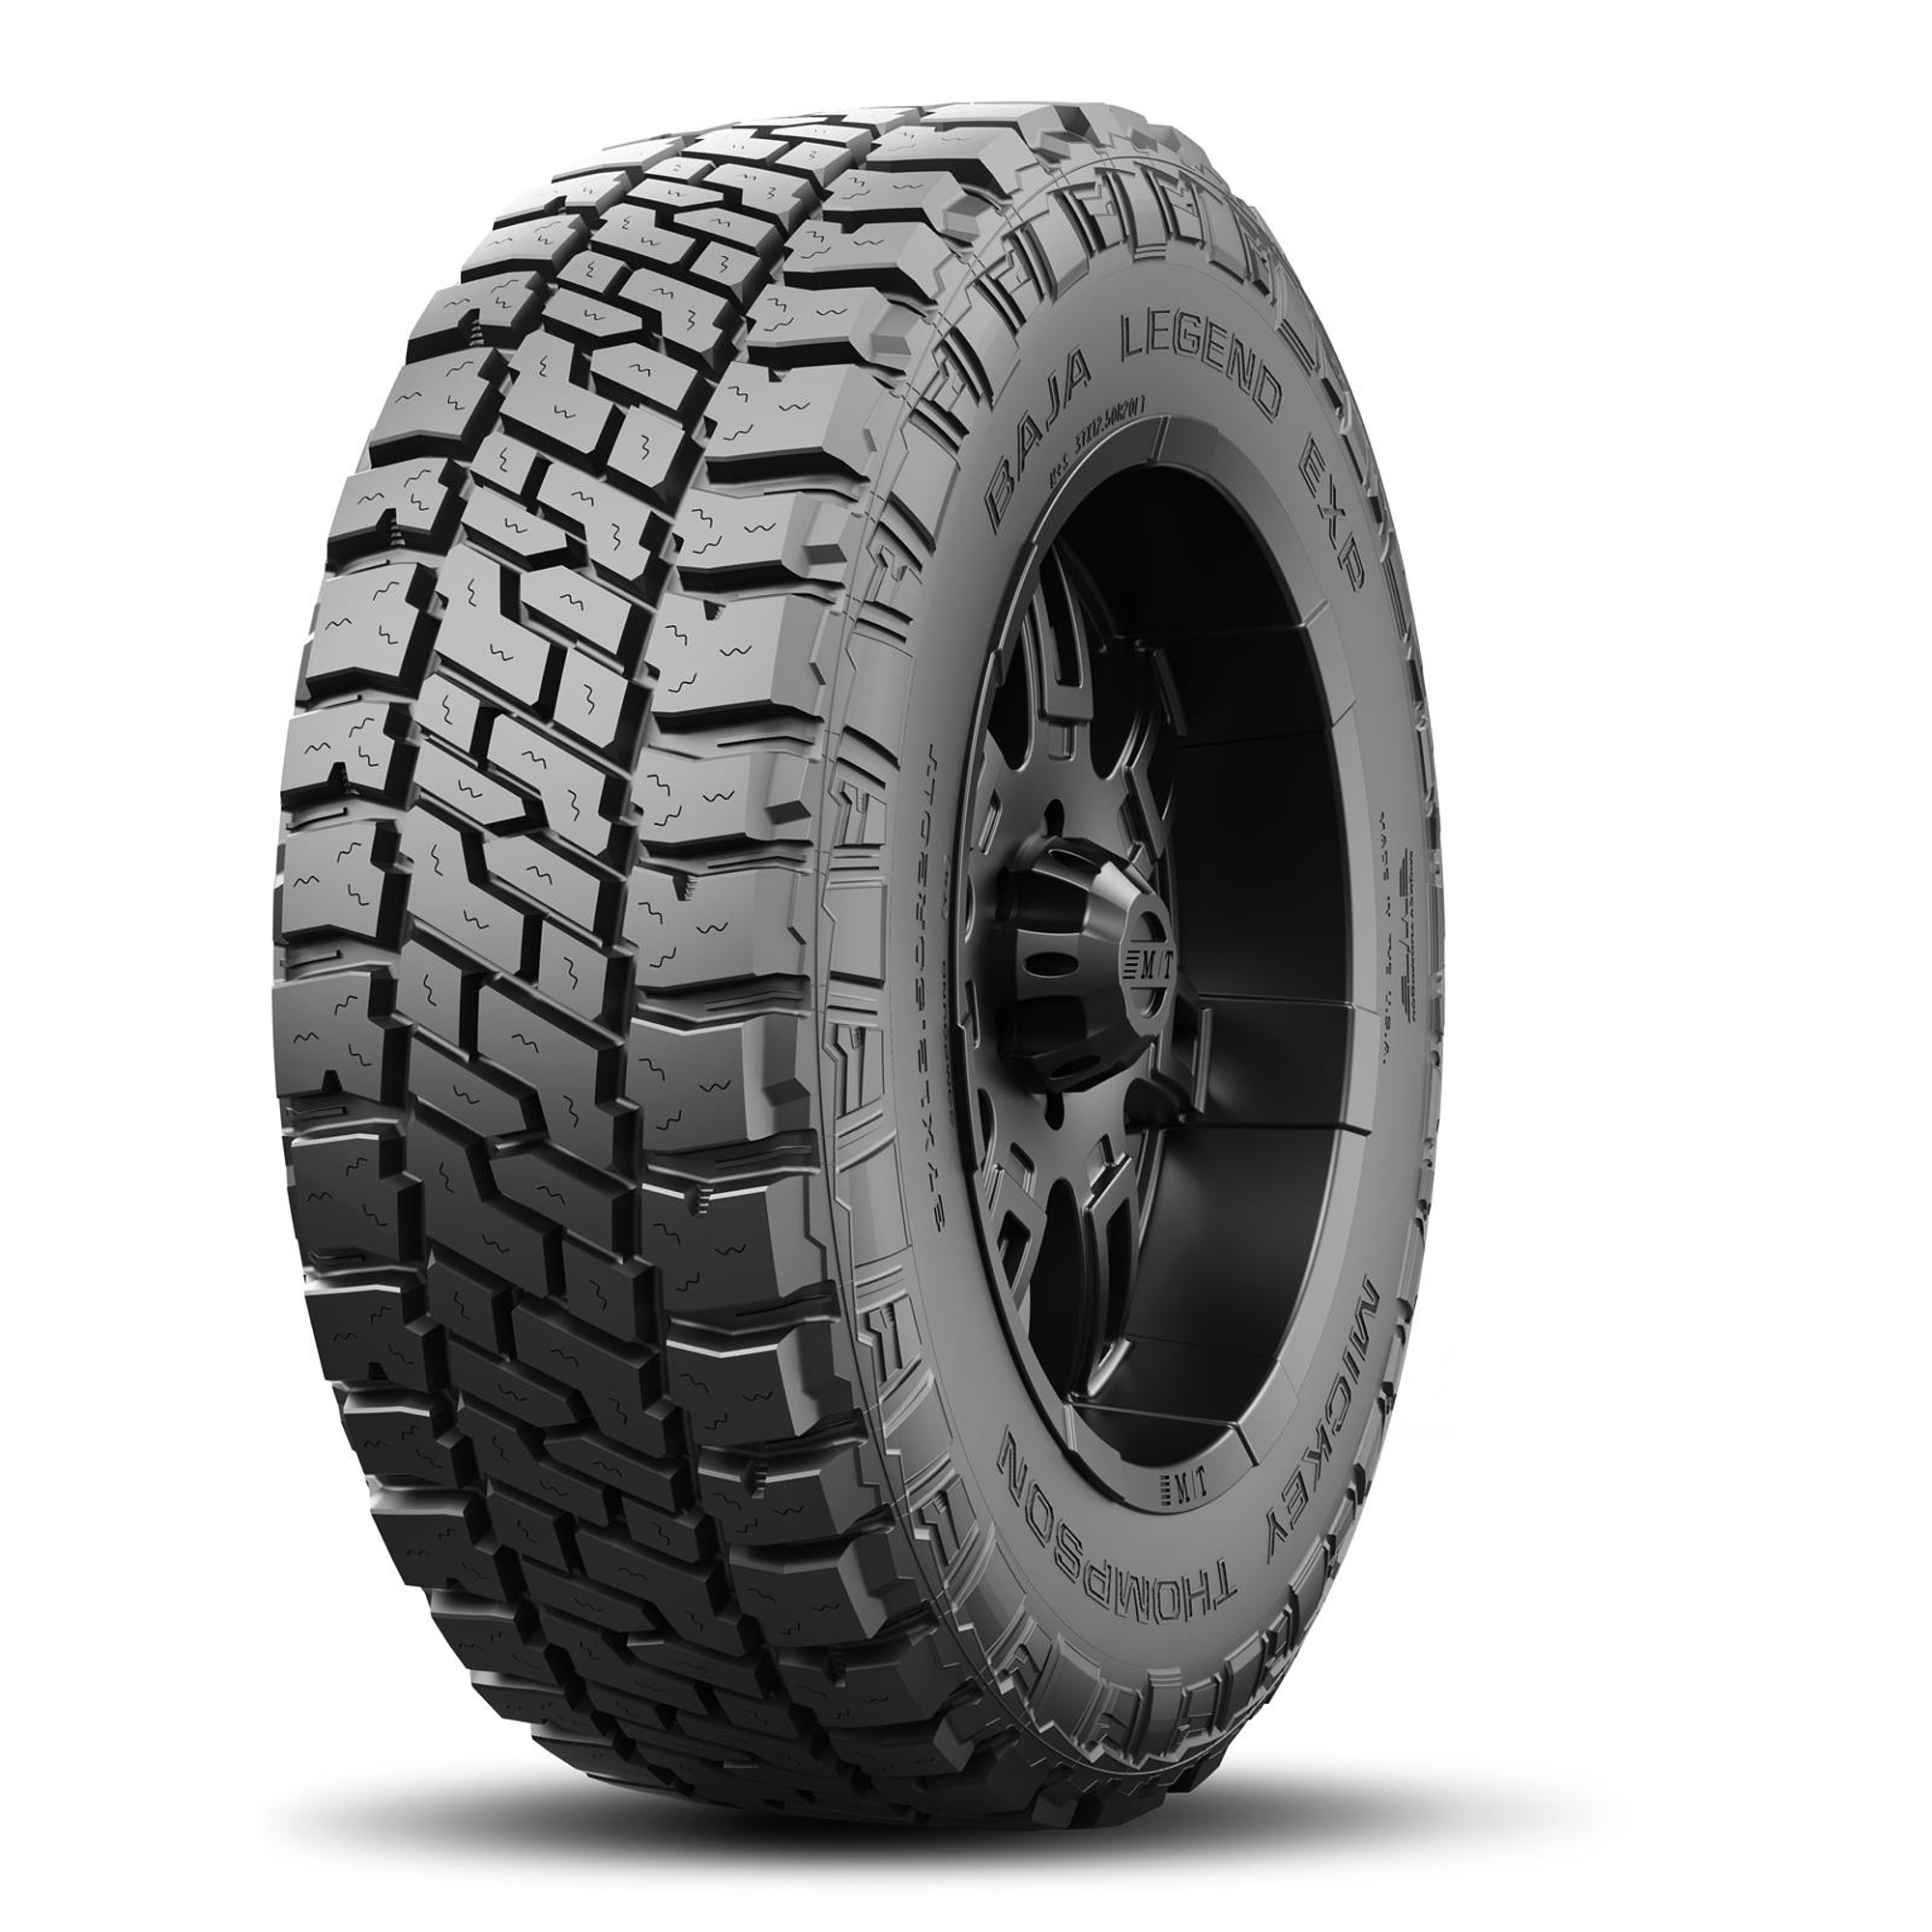 Baja Legend EXP Tire LT275/65R20 126/123Q - 247554